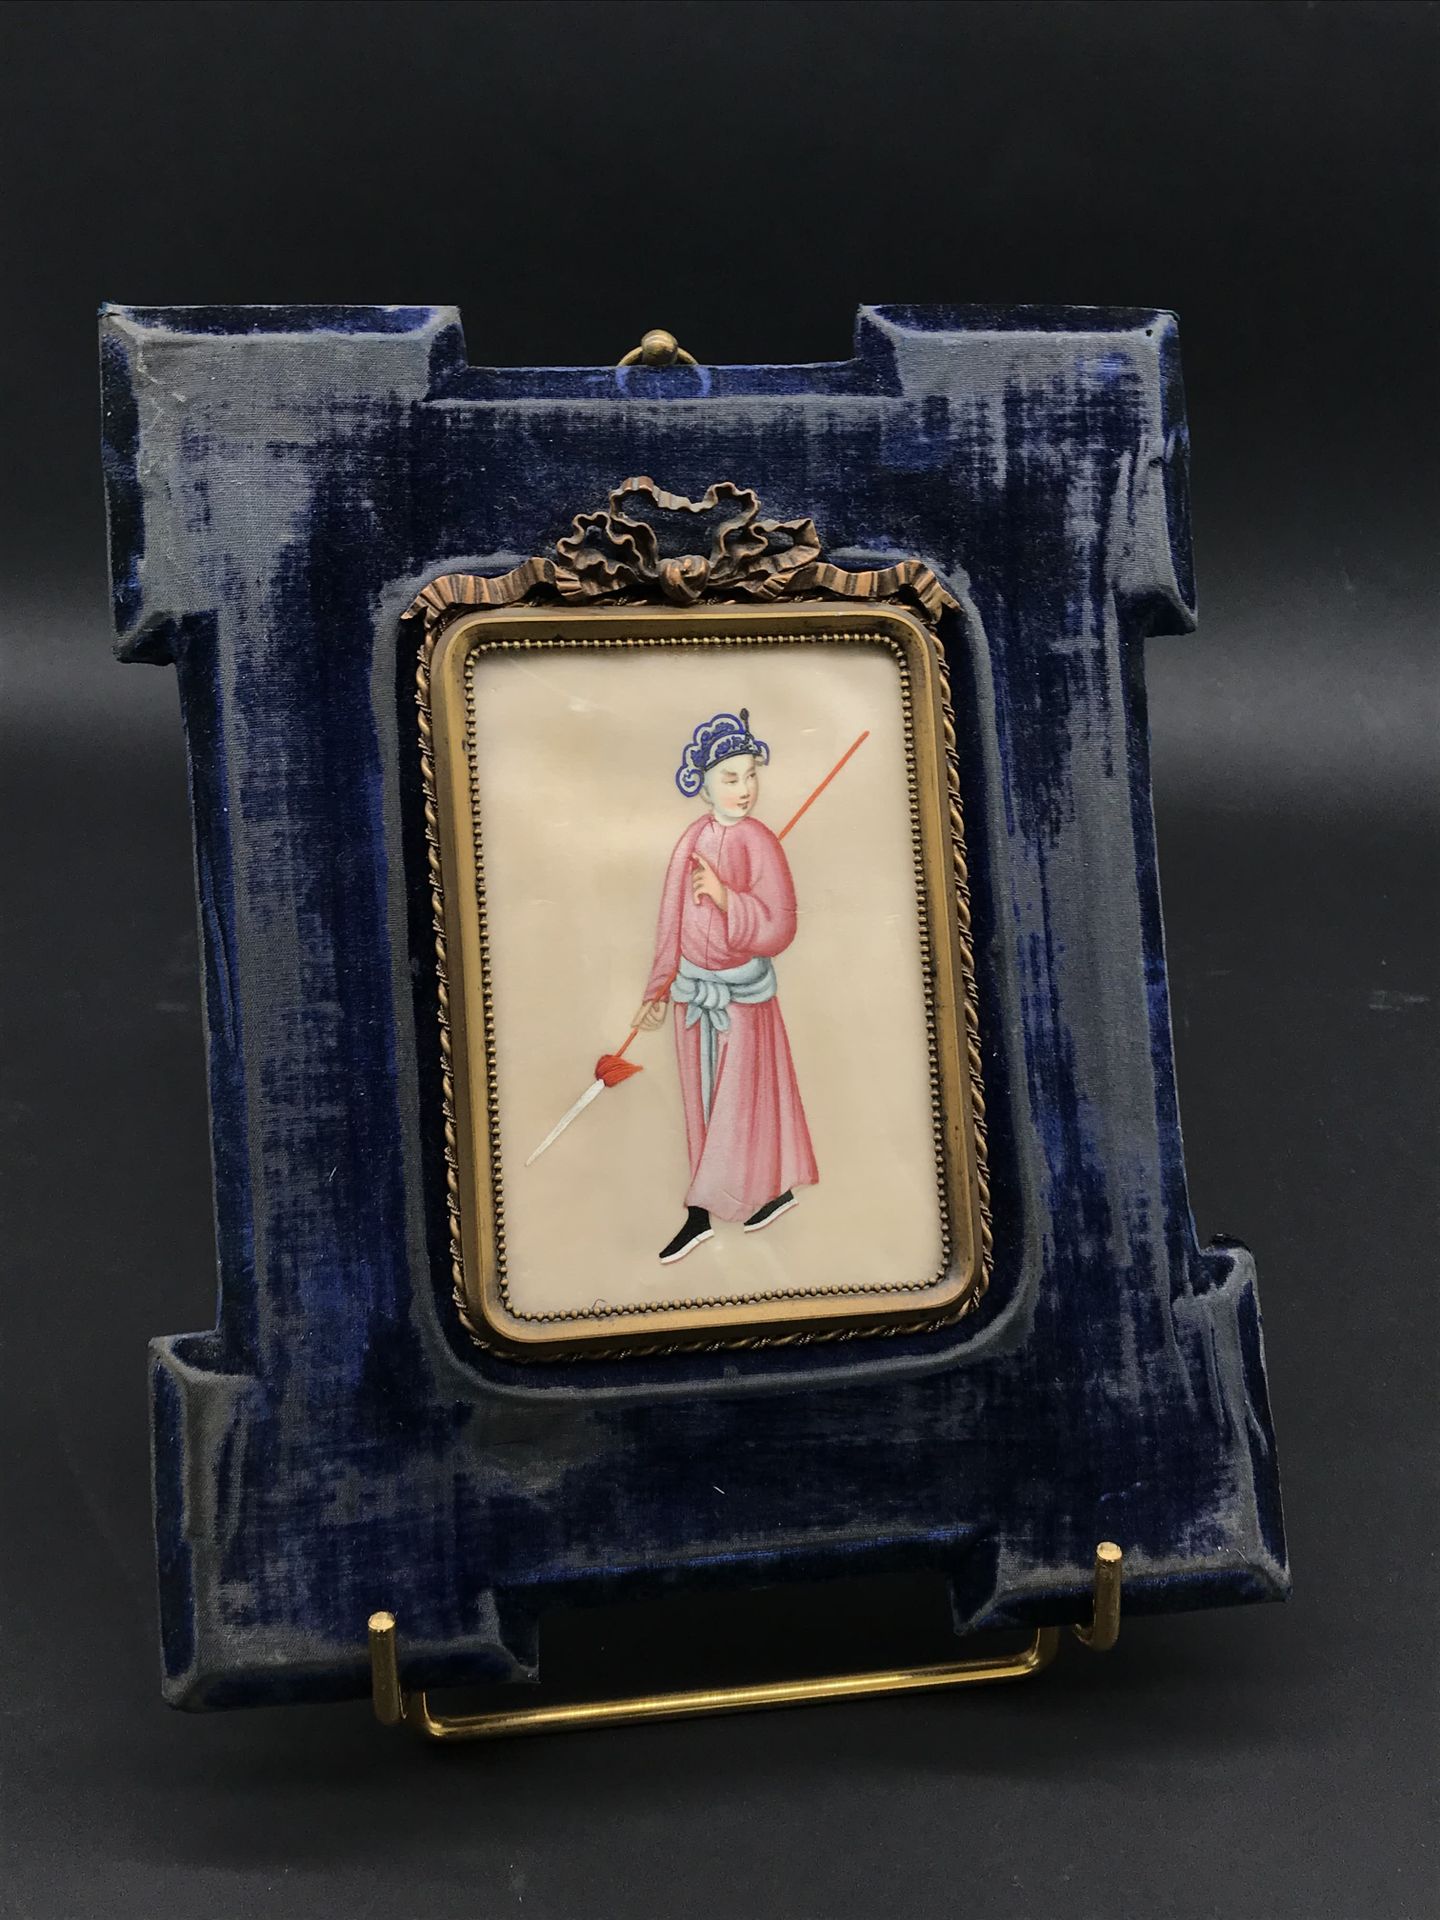 Null 中国

绢上绘画，表现一个拿着长矛的人物

带有蝴蝶结和蓝色天鹅绒的镀金黄铜框架

穿到天鹅绒上。

22x21厘米

约1900年